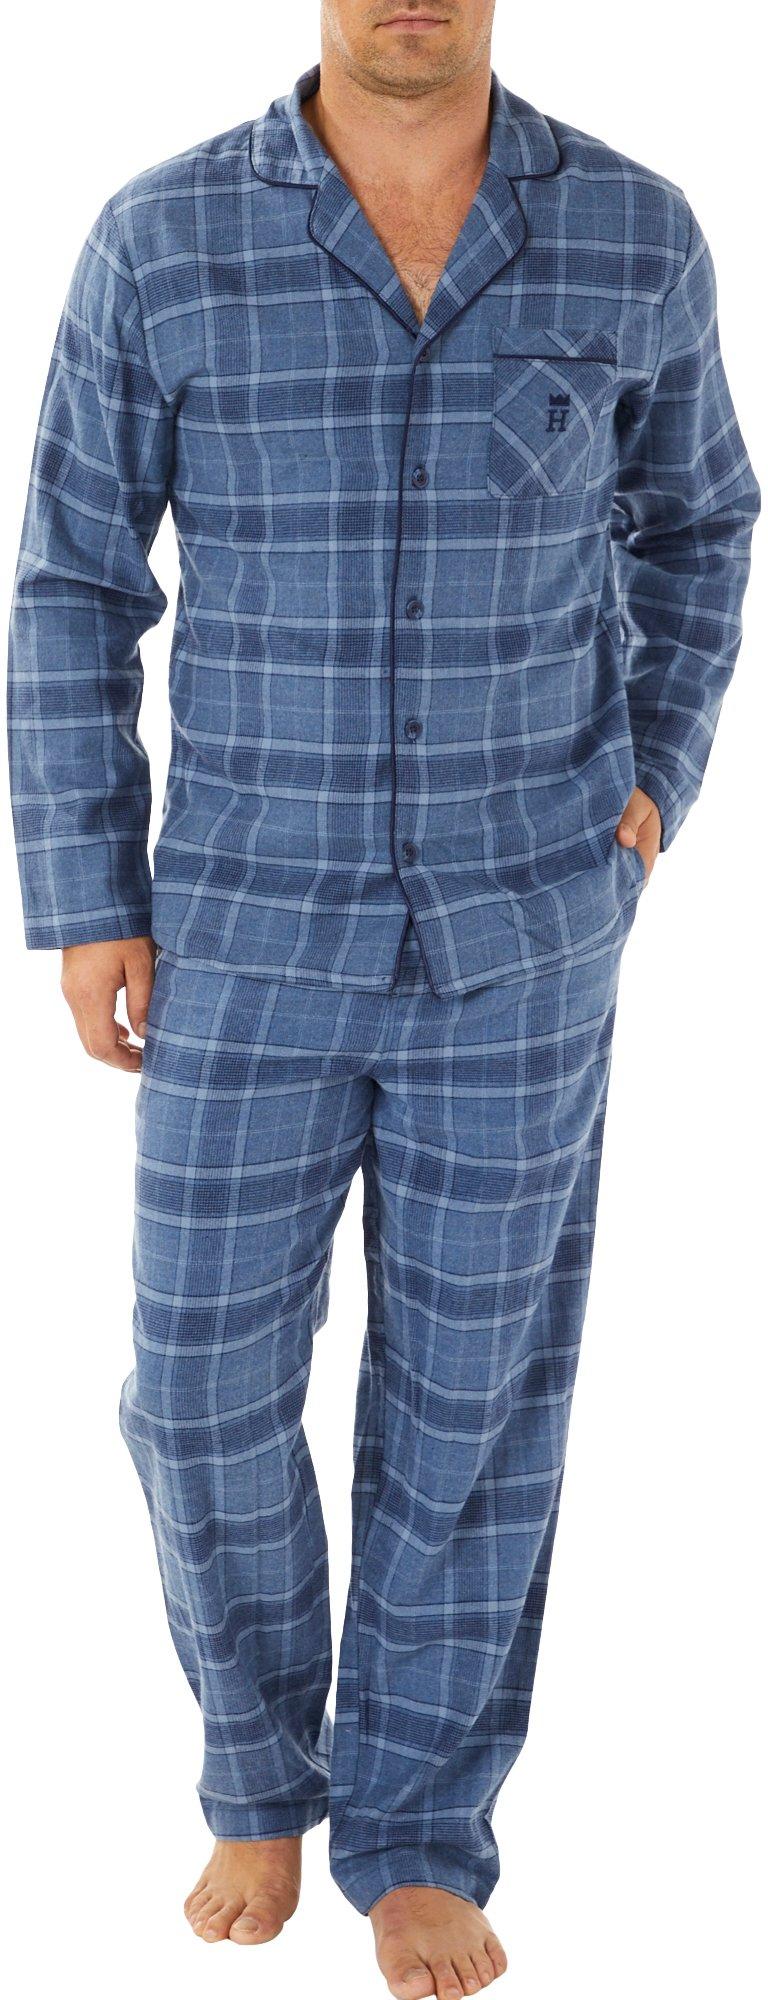 Men's Robes & Pajamas | Bealls Florida